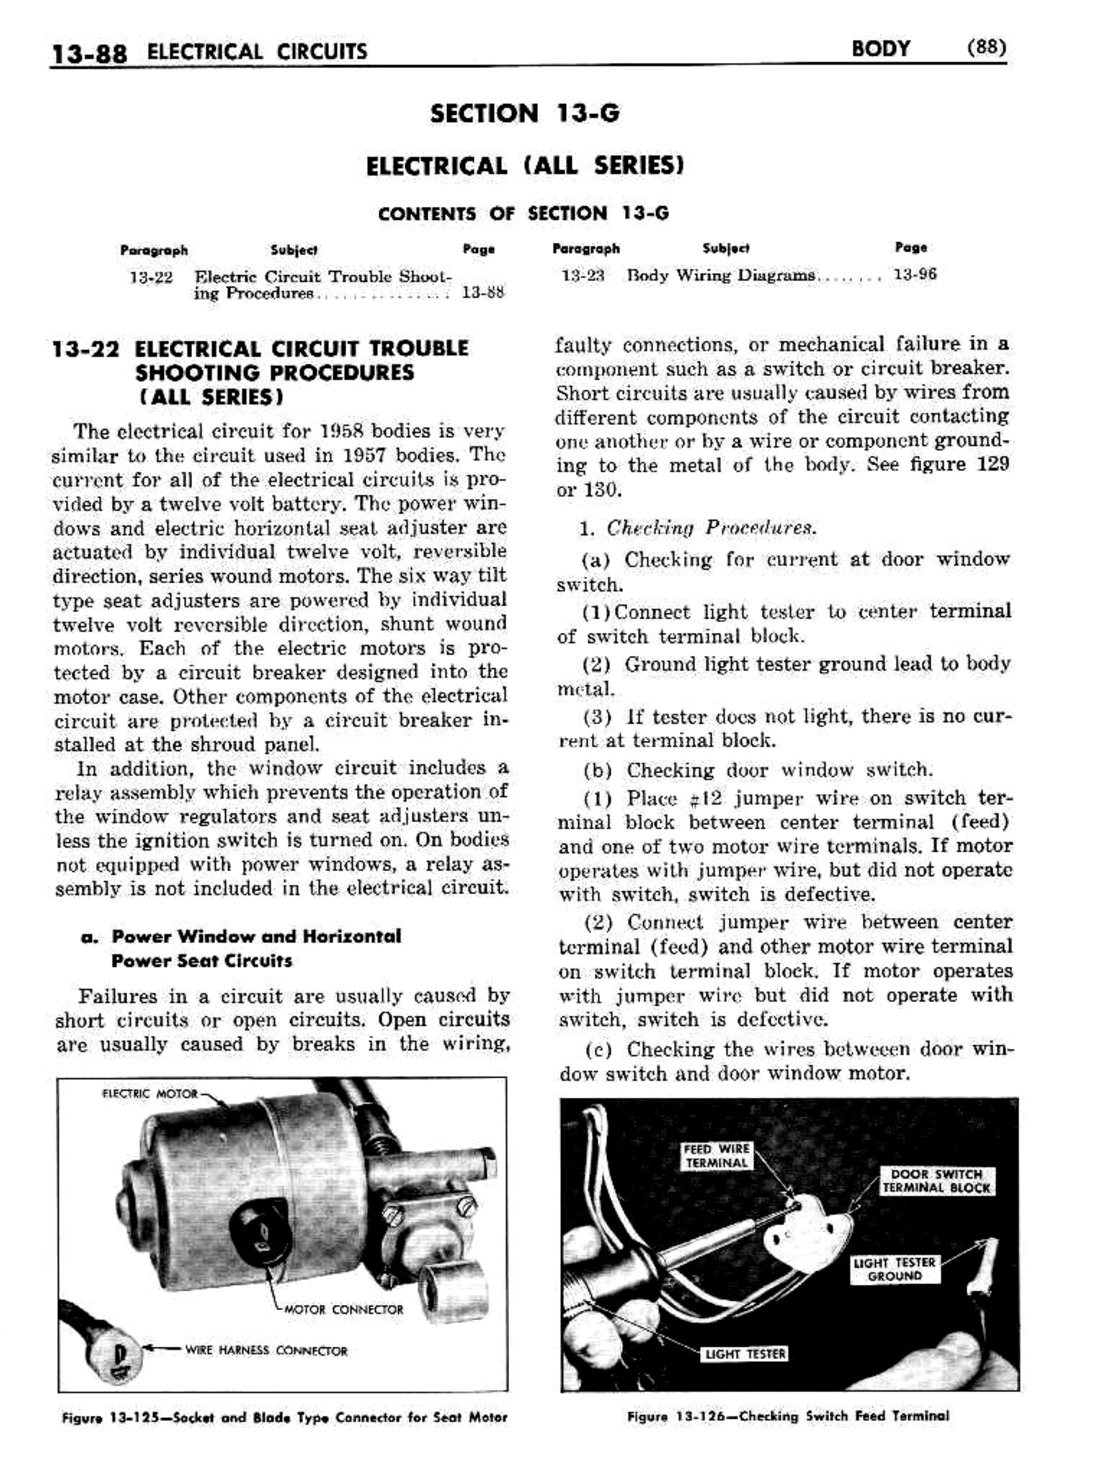 n_1958 Buick Body Service Manual-089-089.jpg